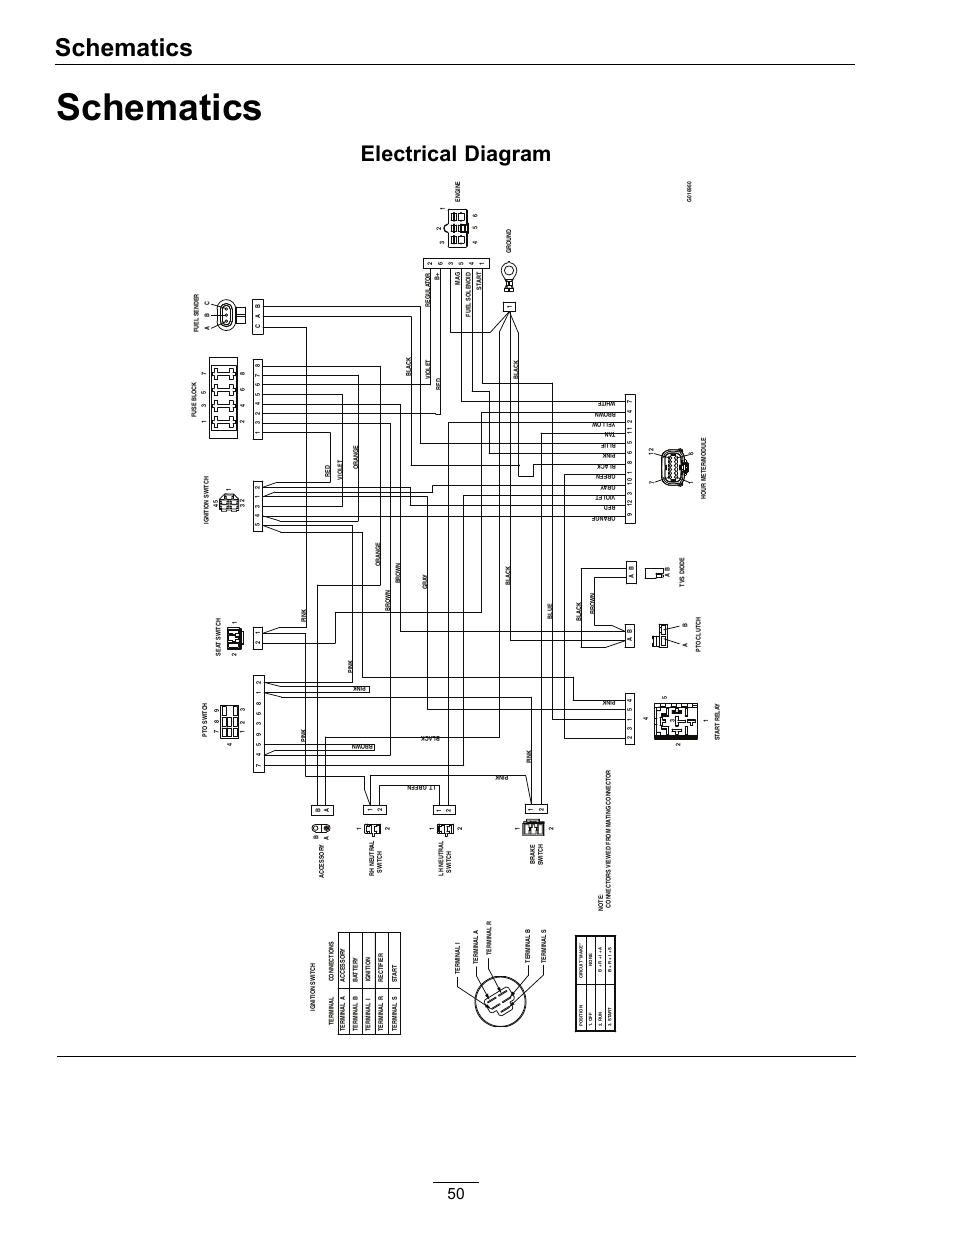 accutrac trailer brake wiring diagram